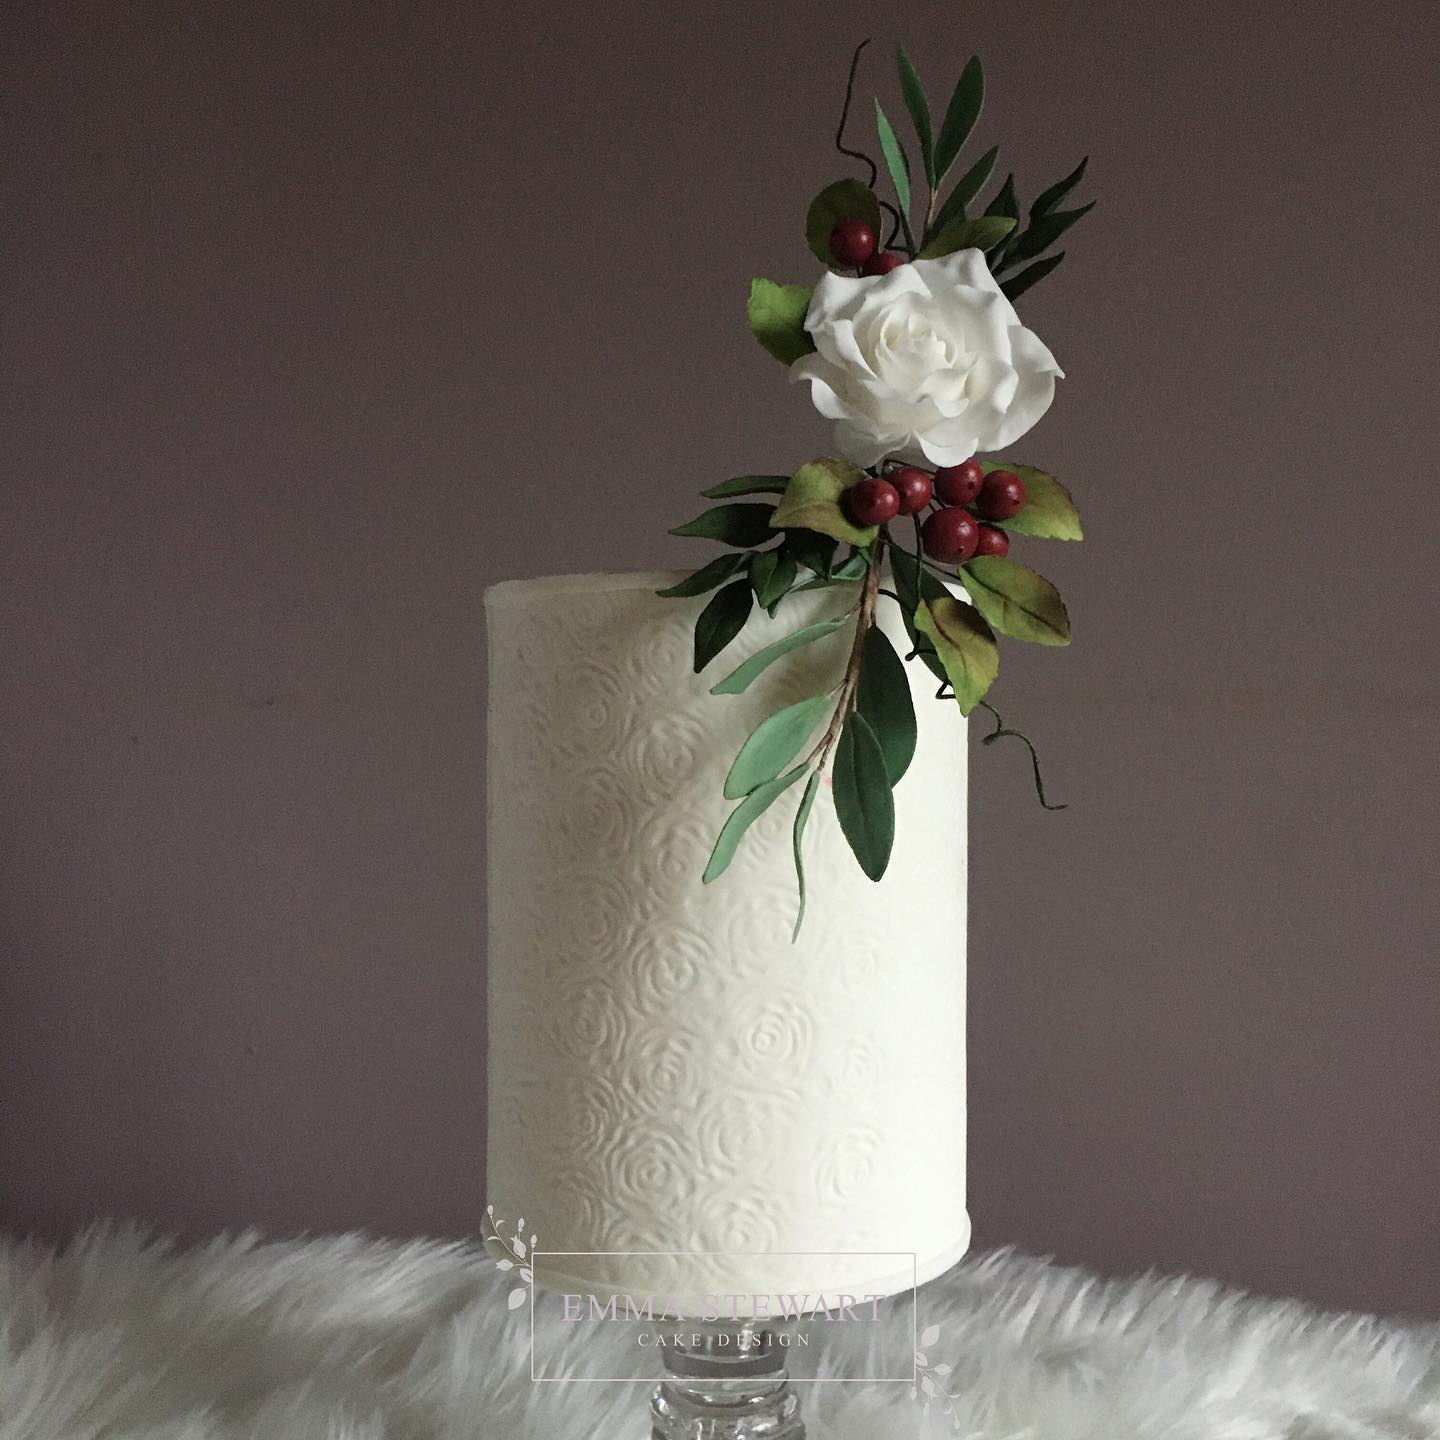 winter wedding cakes white berries